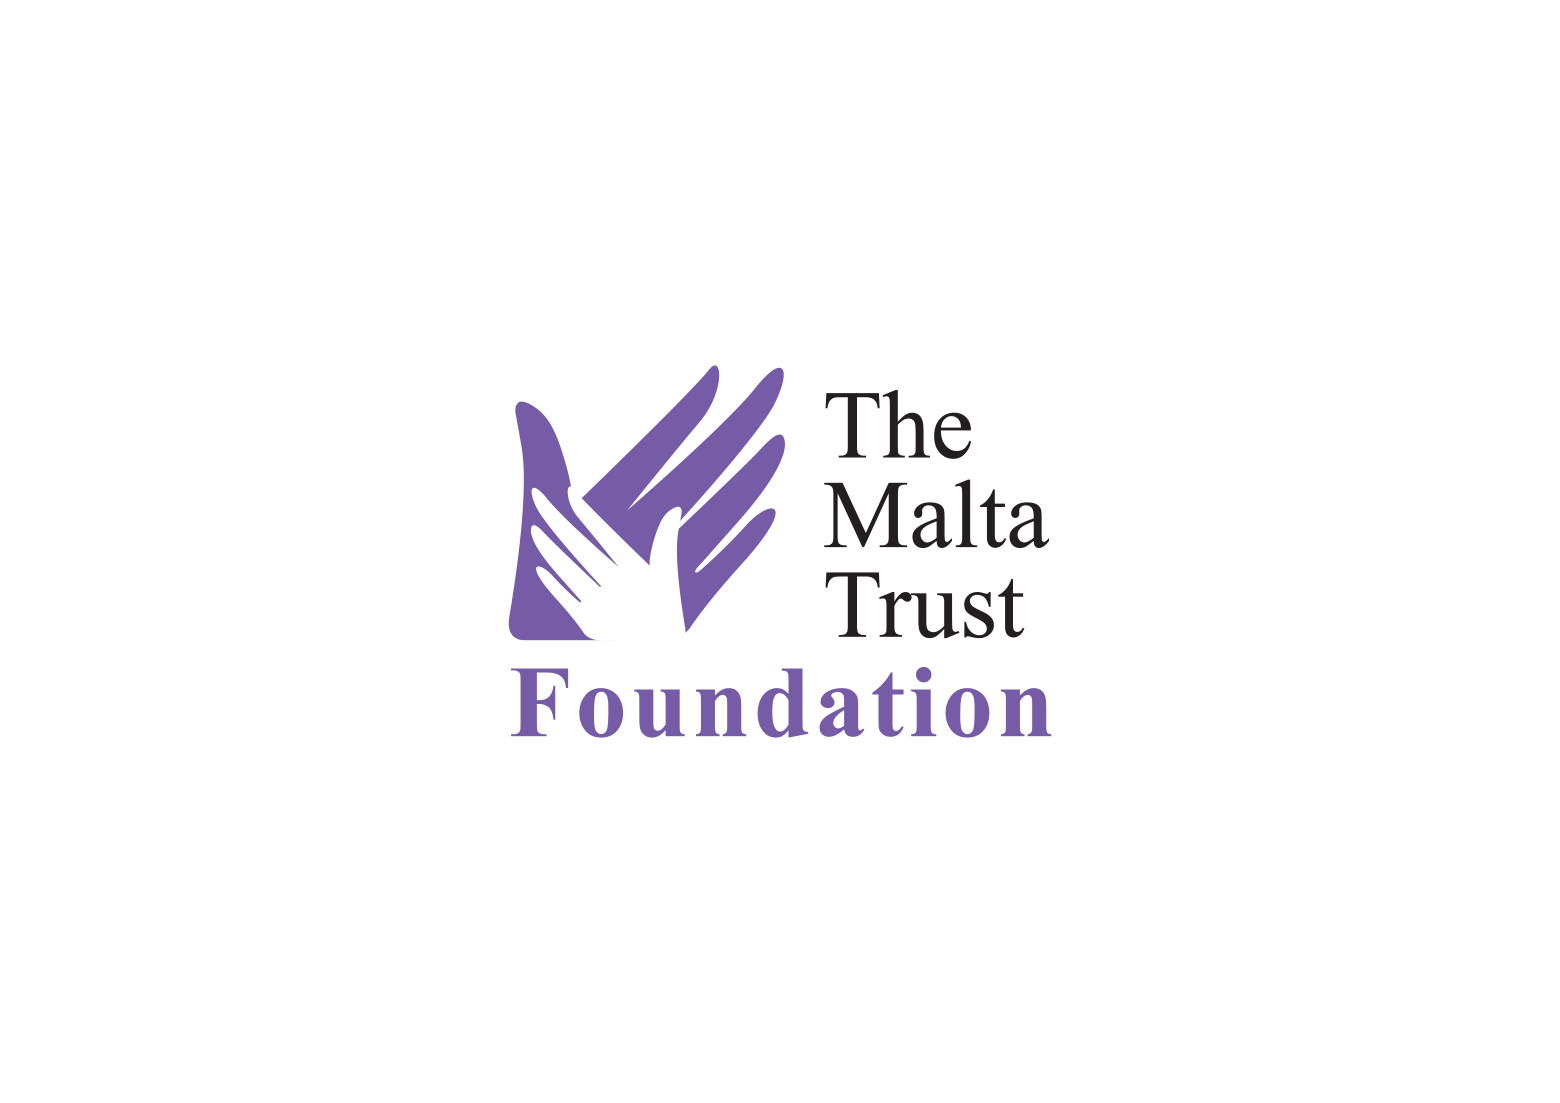 The Malta Trust Foundation